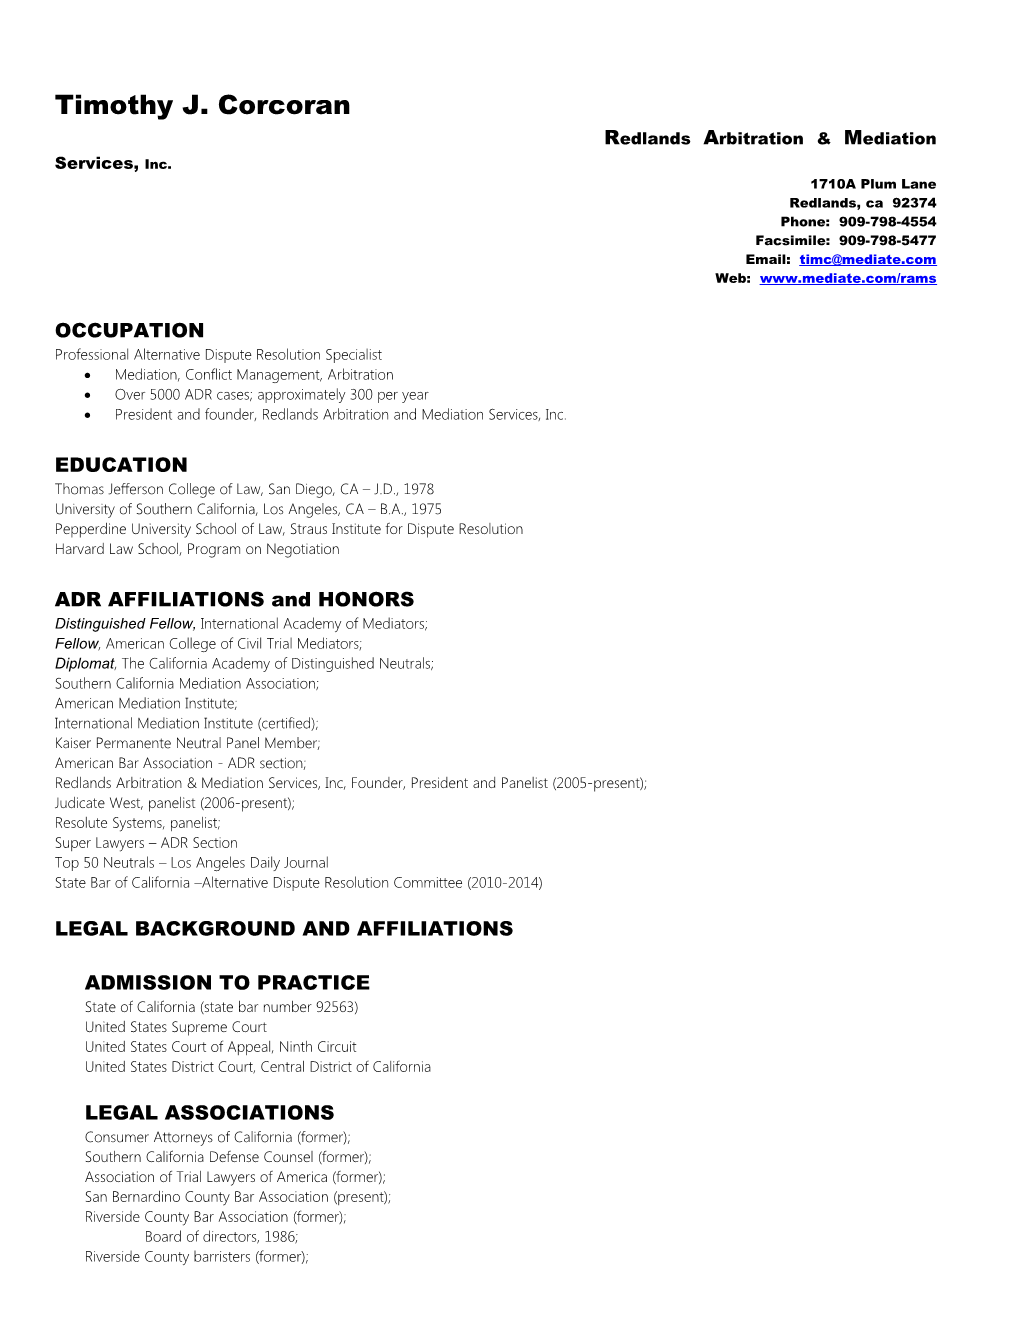 Timothy J. Corcoran Redlands Arbitration & Mediation Services, Inc